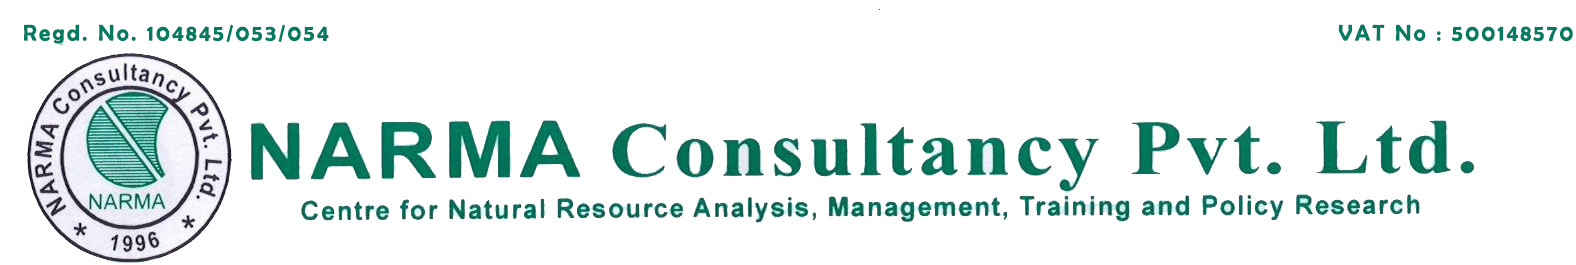 Narma Consultancy Pvt. Ltd.